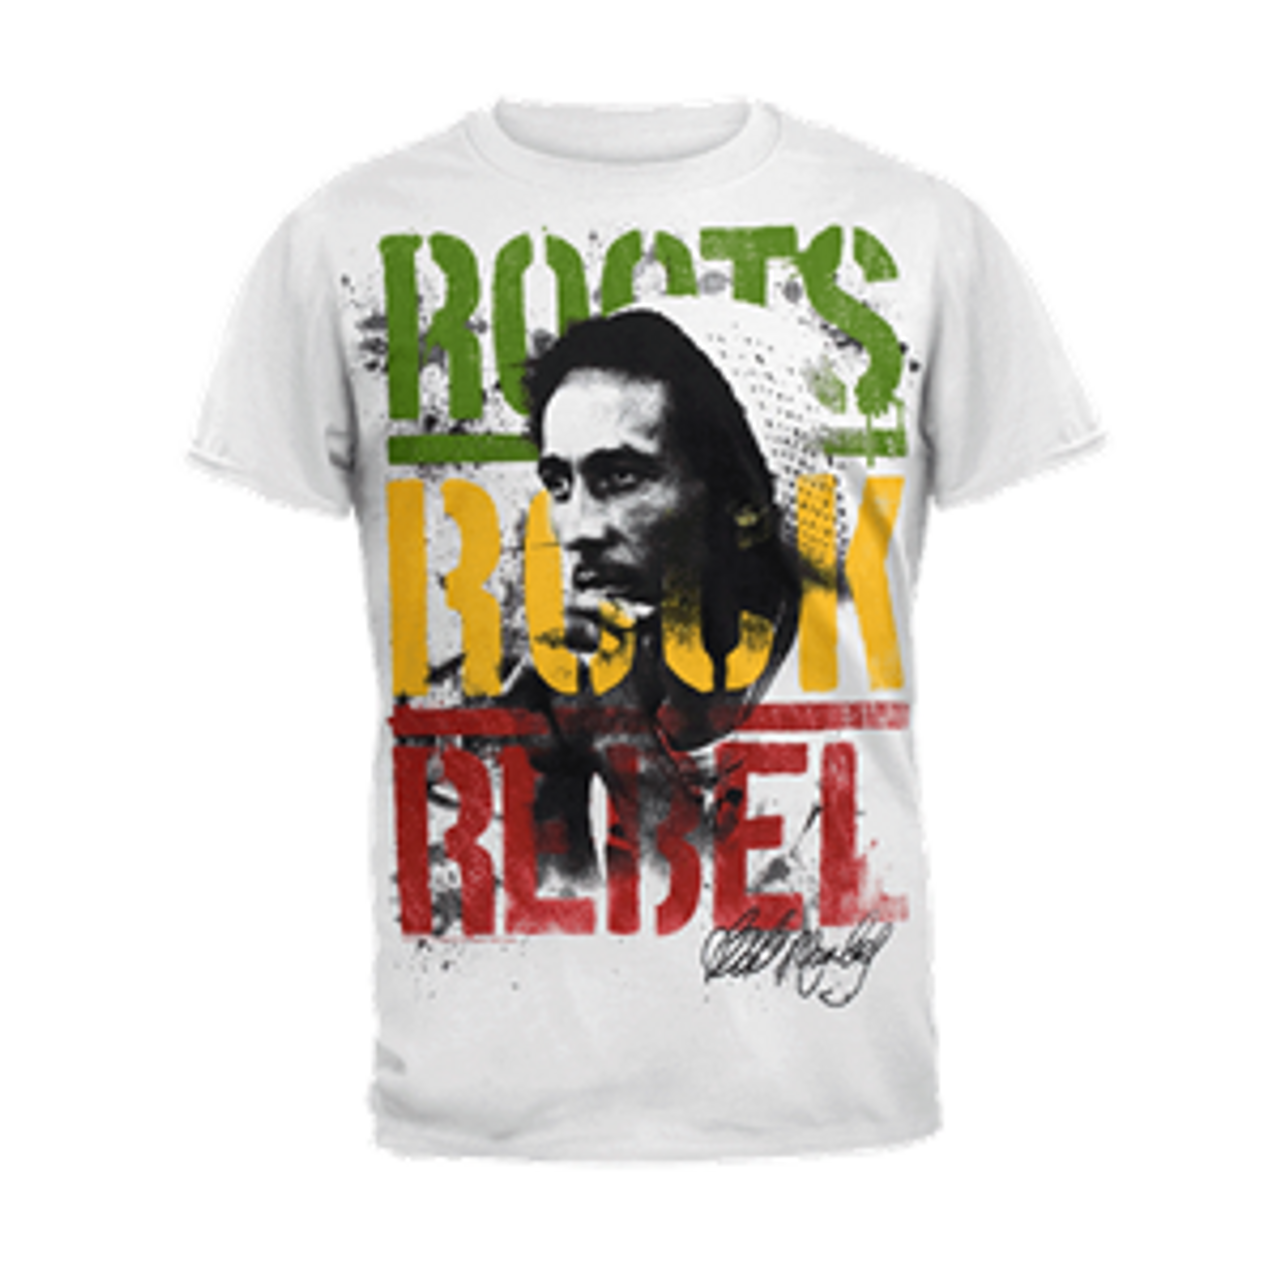 Bob Marley Lyrics T-Shirts for Sale